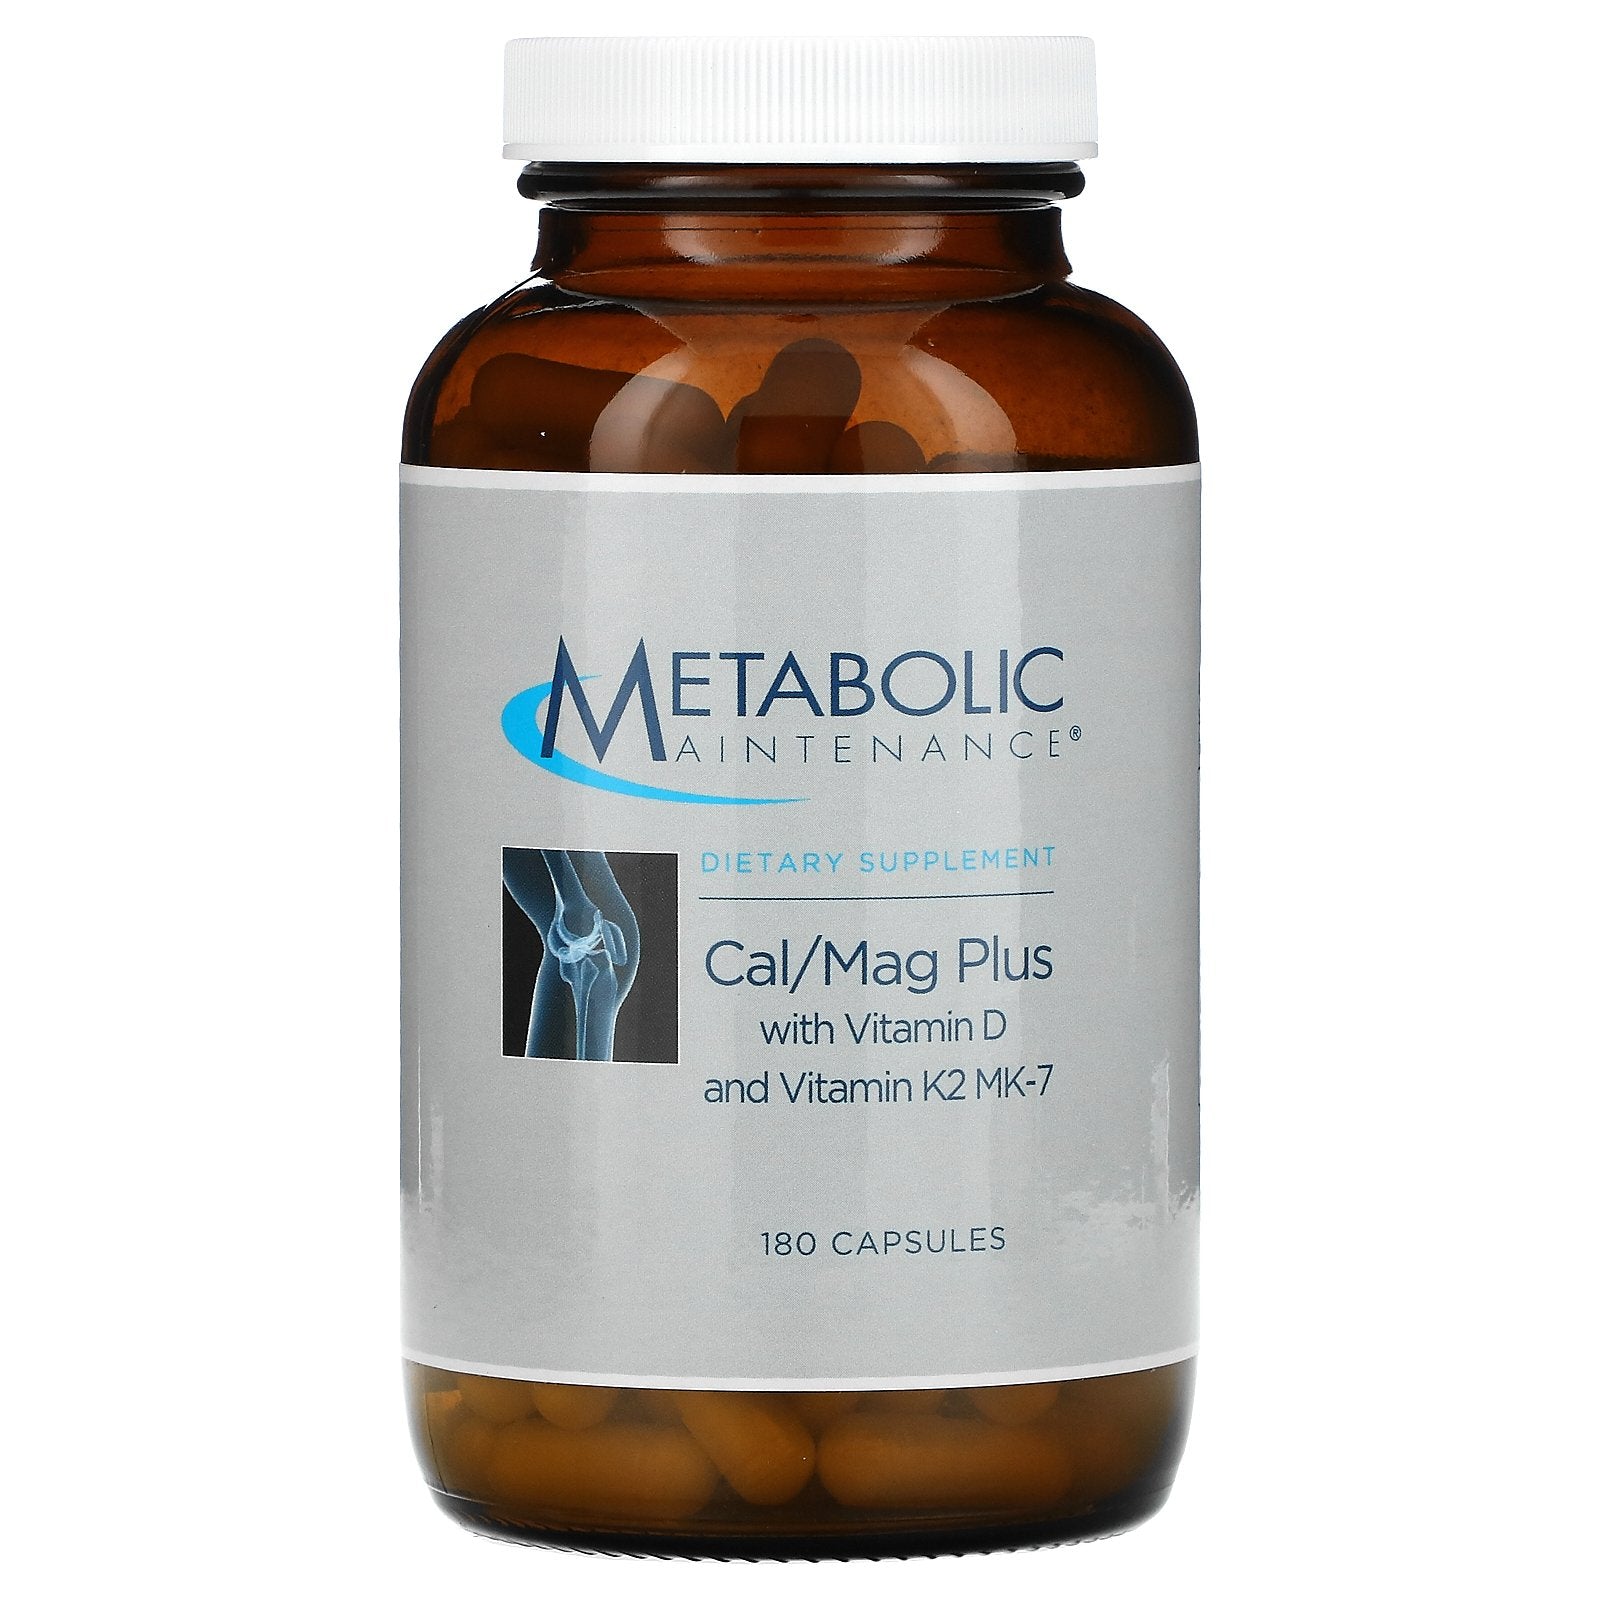 Metabolic Maintenance, Cal/Mag Plus with Vitamin D and Vitamin K2 MK-7